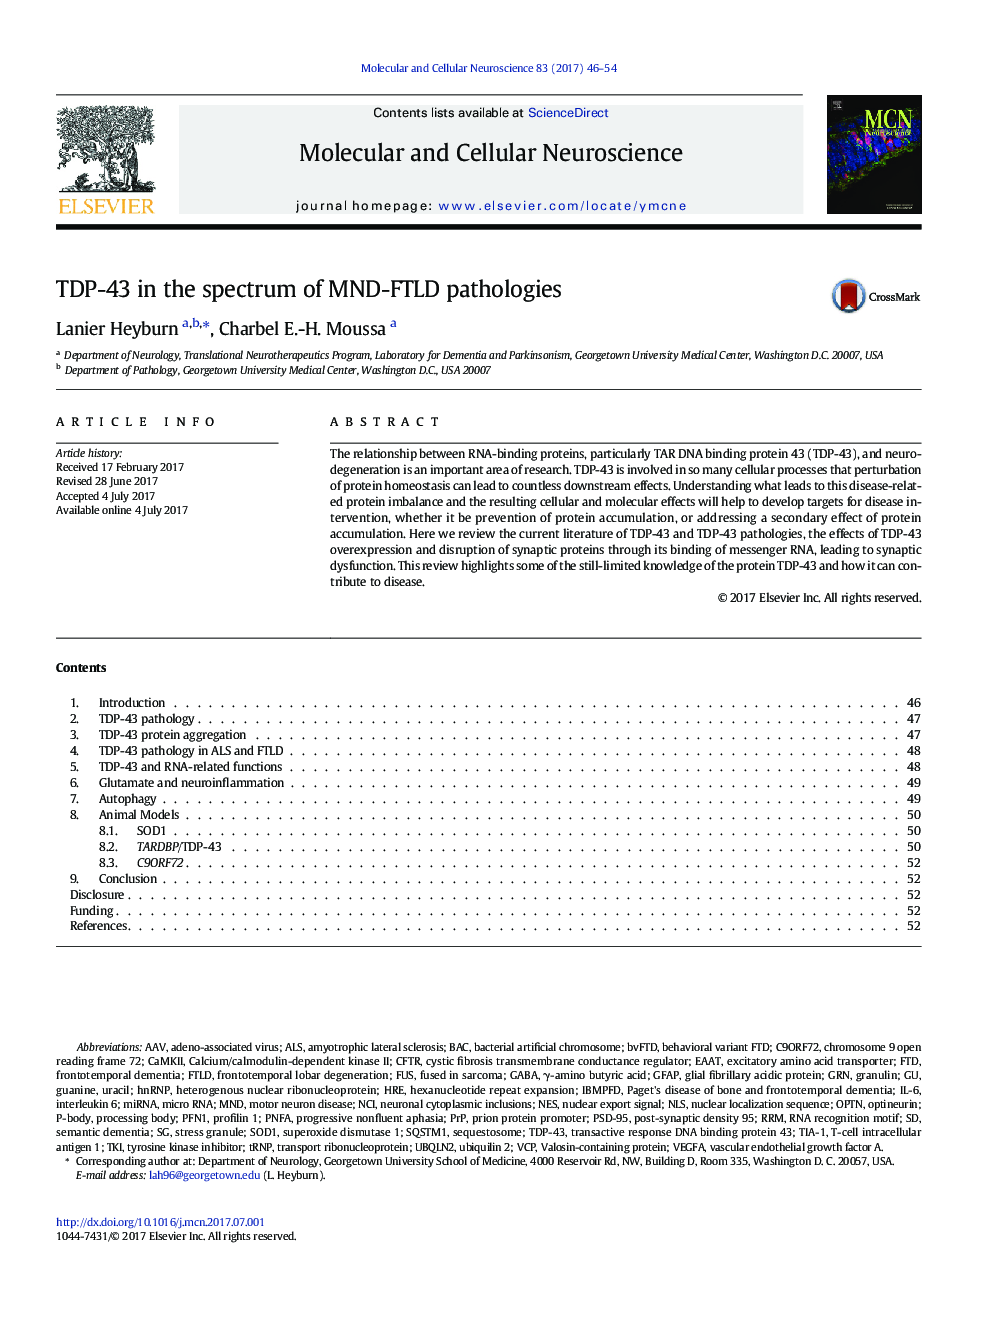 TDP-43 in the spectrum of MND-FTLD pathologies